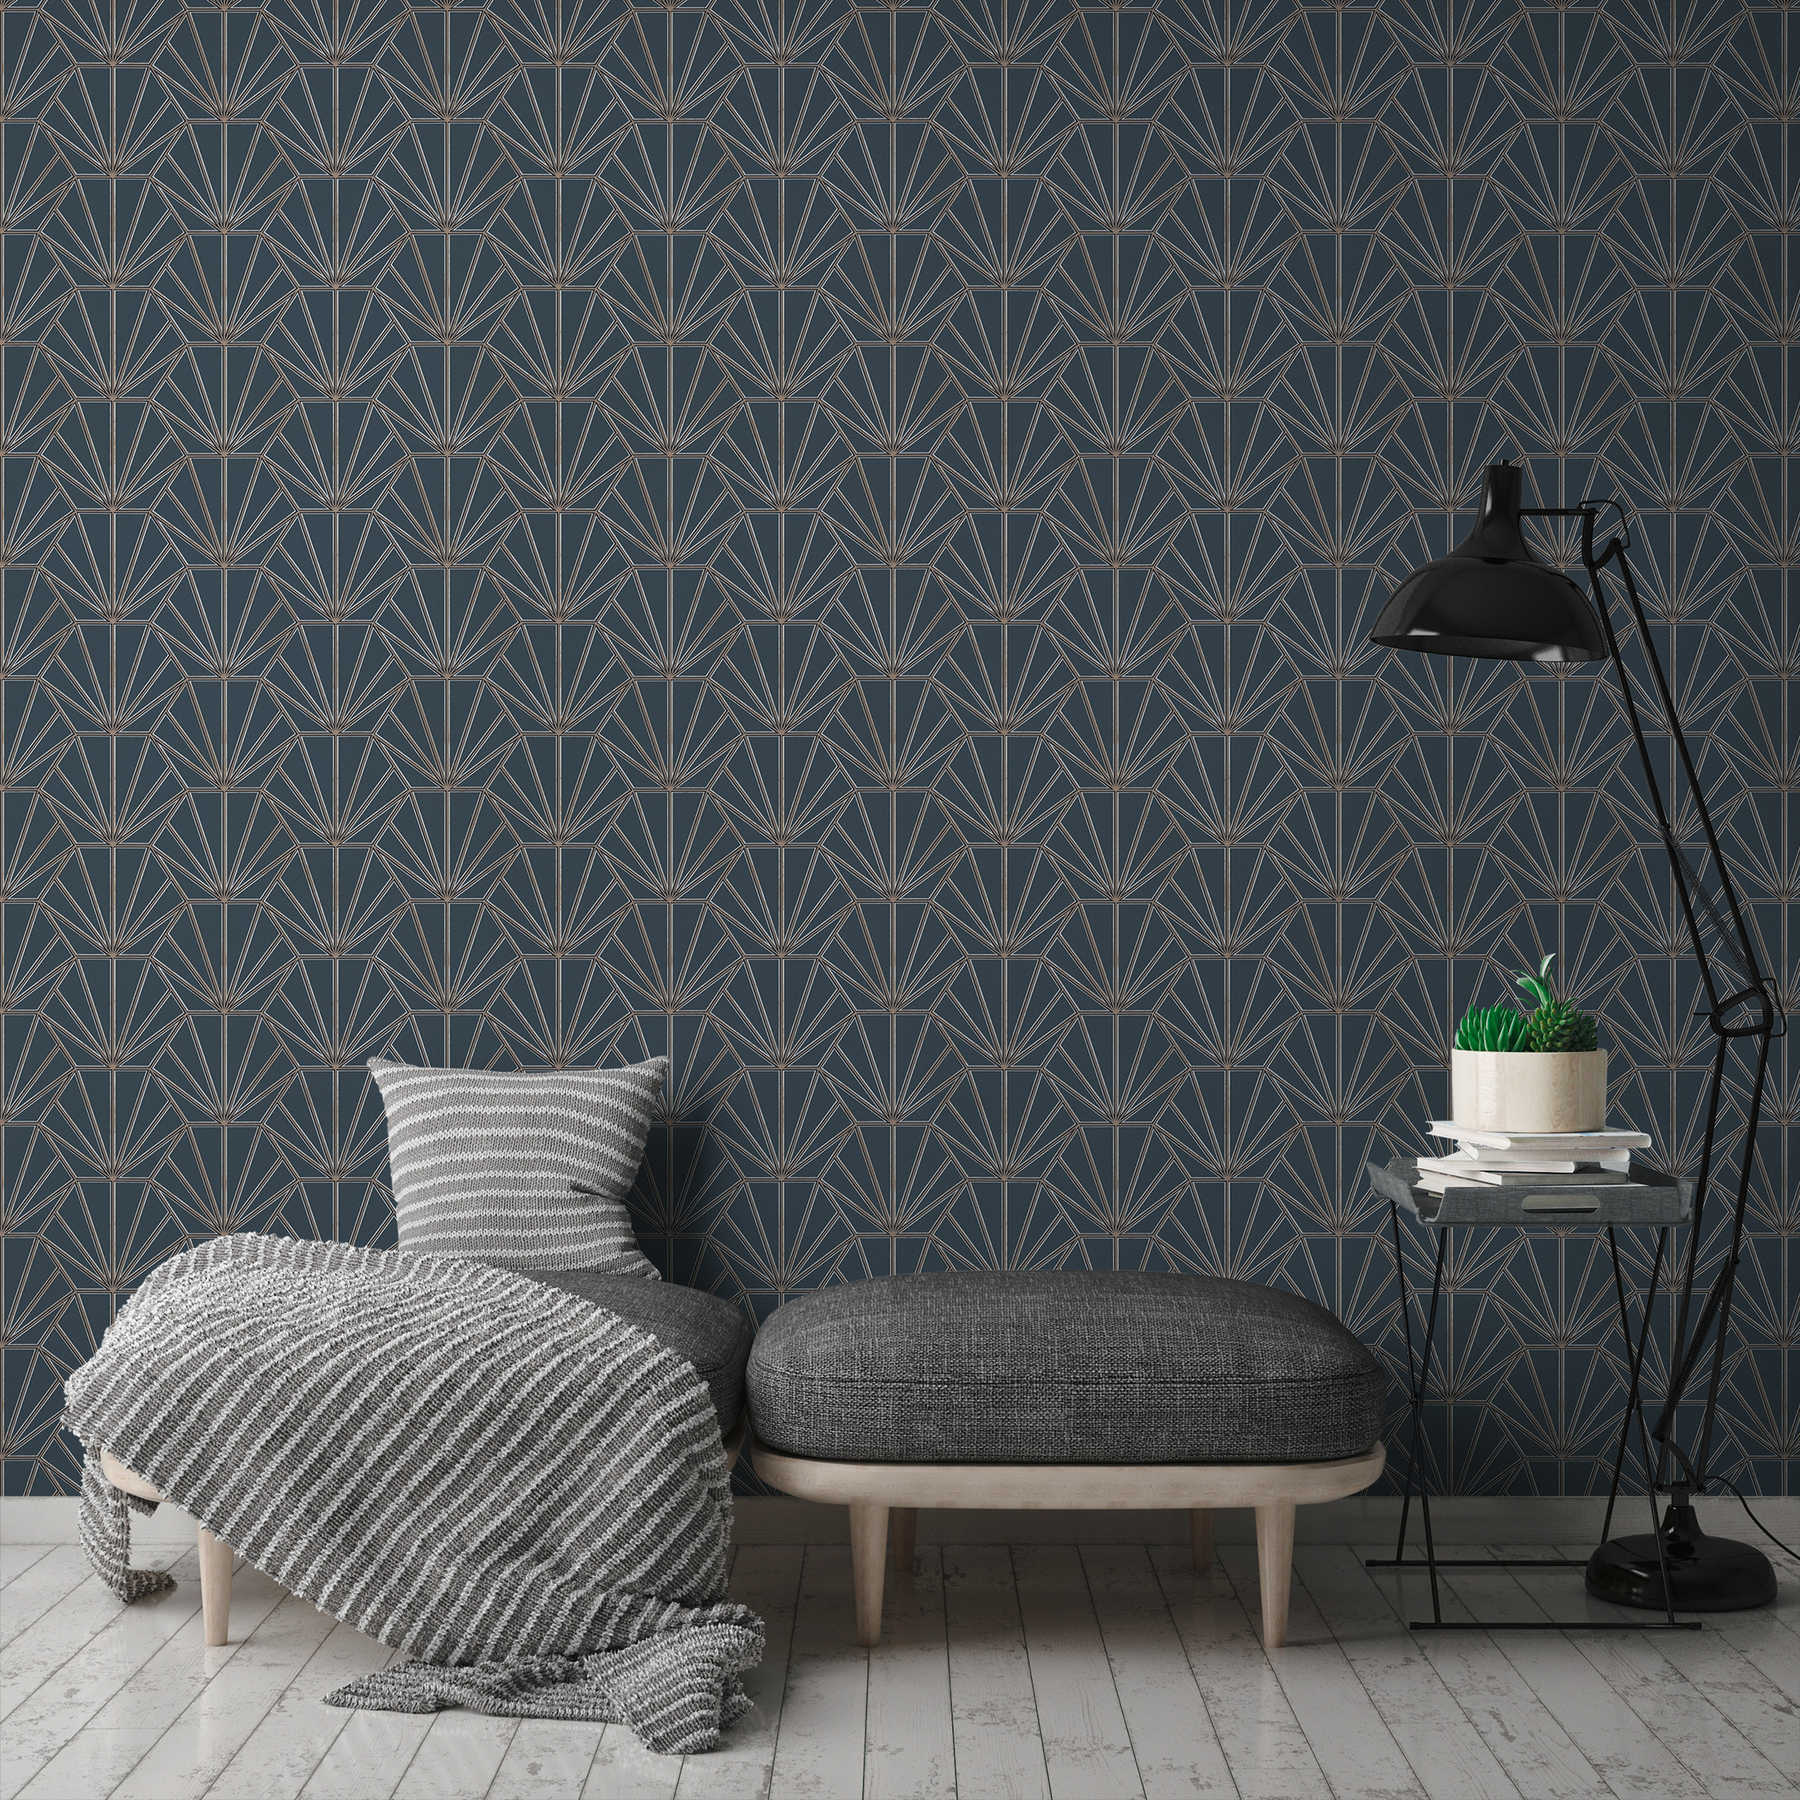             Wallpaper art deco pattern and line motif - blue, gold, black
        